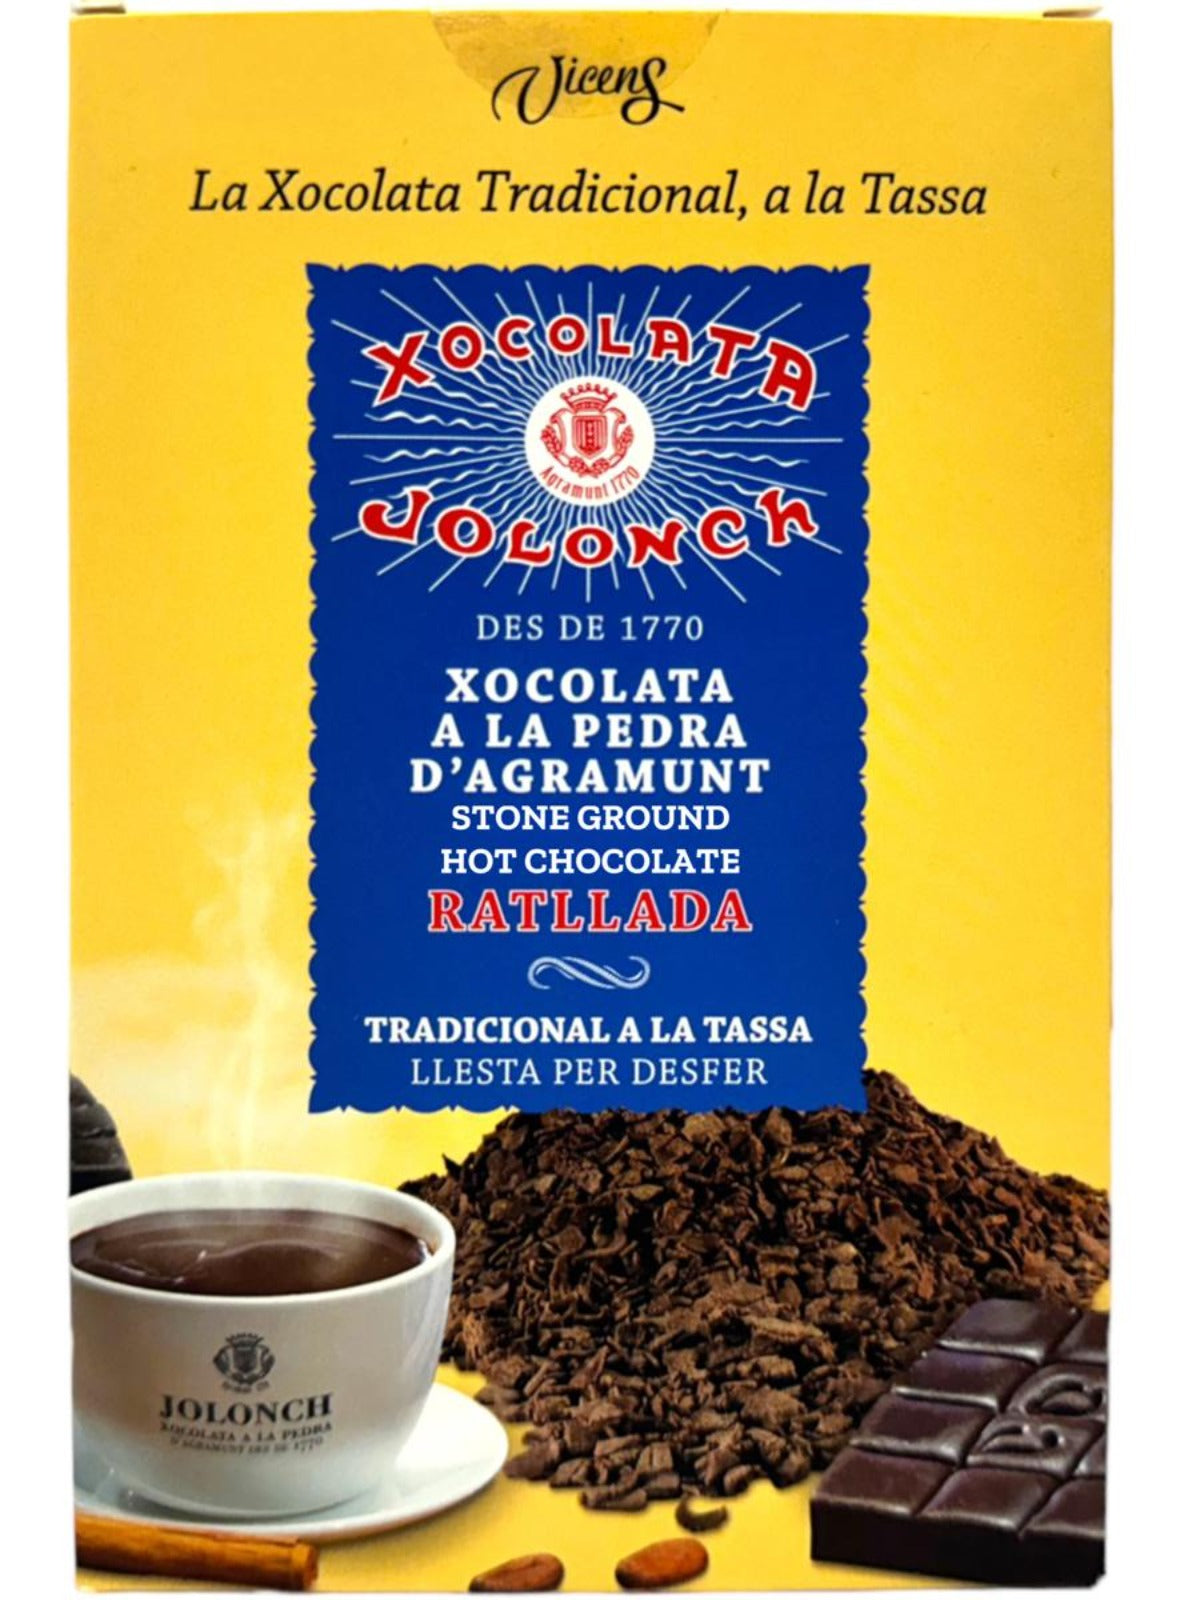 Vicens Xocolata Jolonch Coxolate A La Pedra A La Tazza Stone Ground Hot Chocolate 300g Best Before January 2025